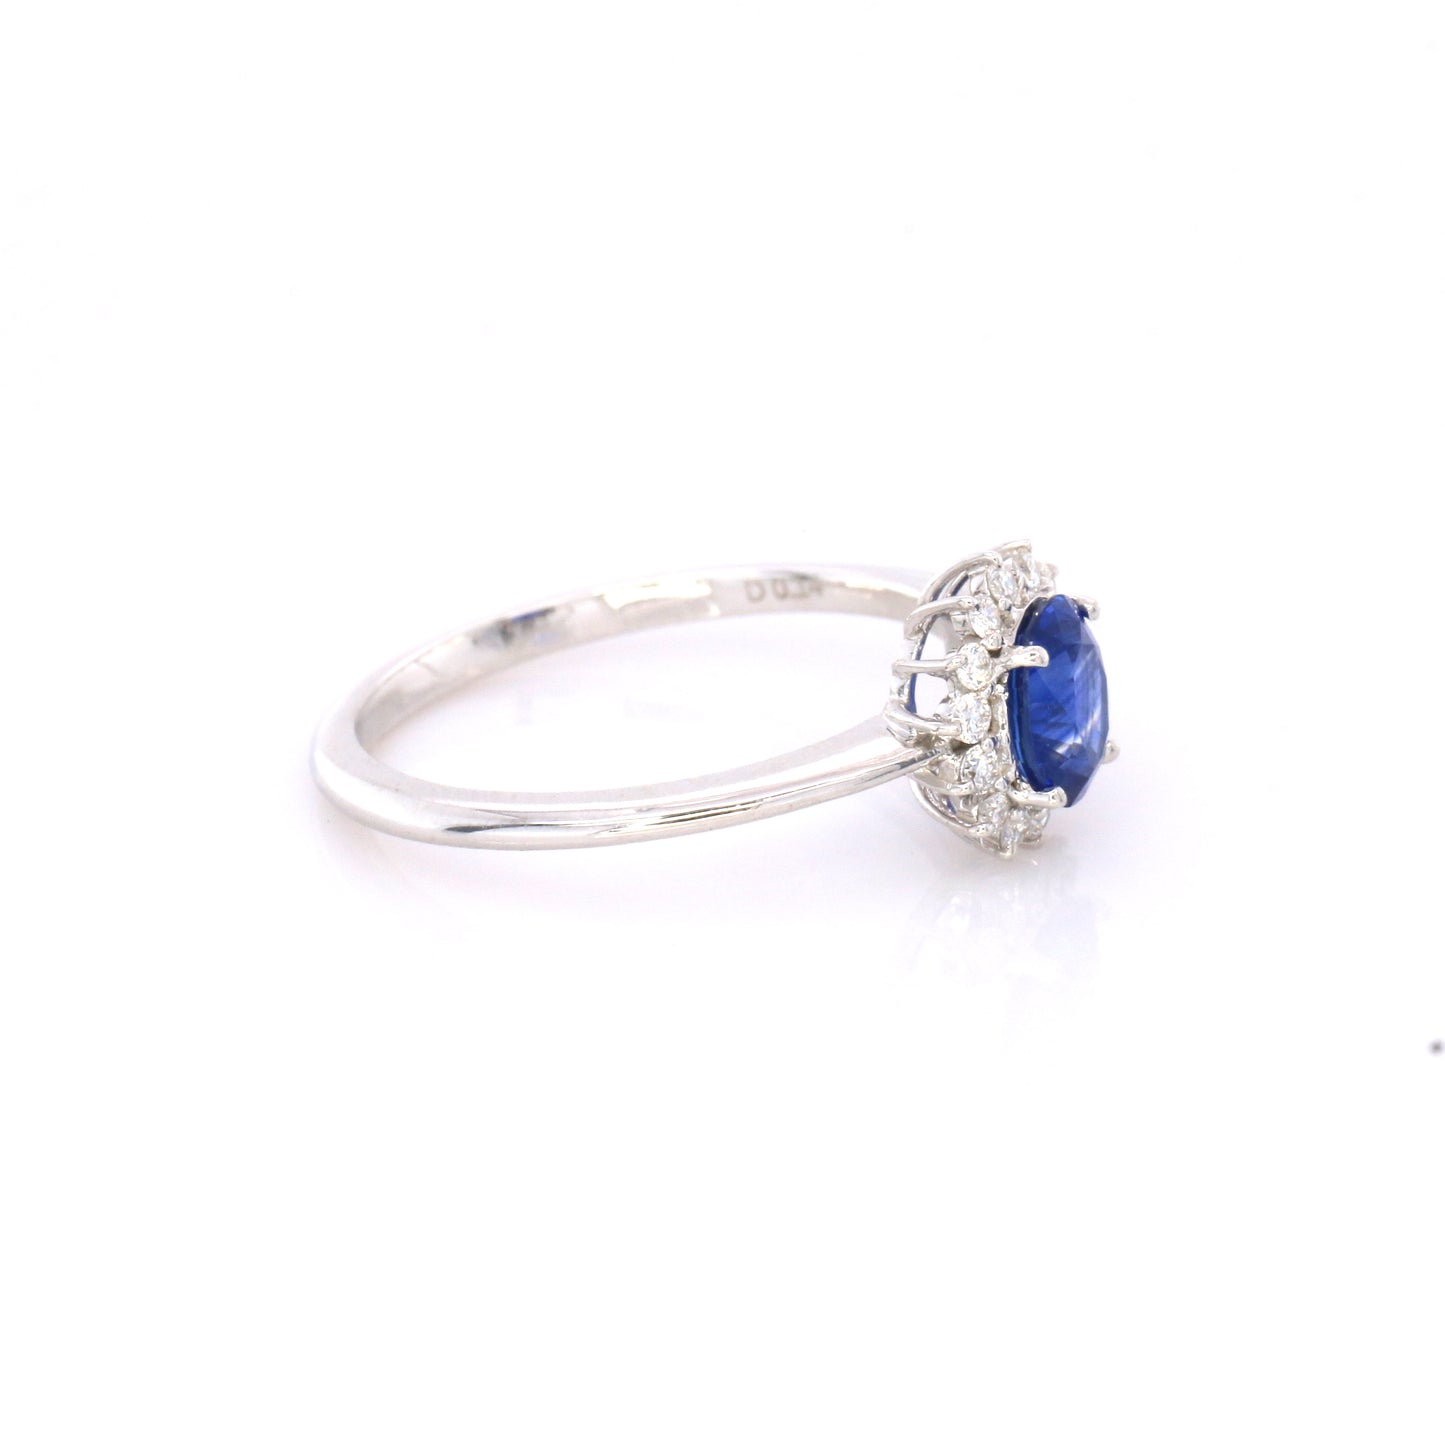 Cluster Blue Sapphire Ring - 18K White Gold 2.29gm